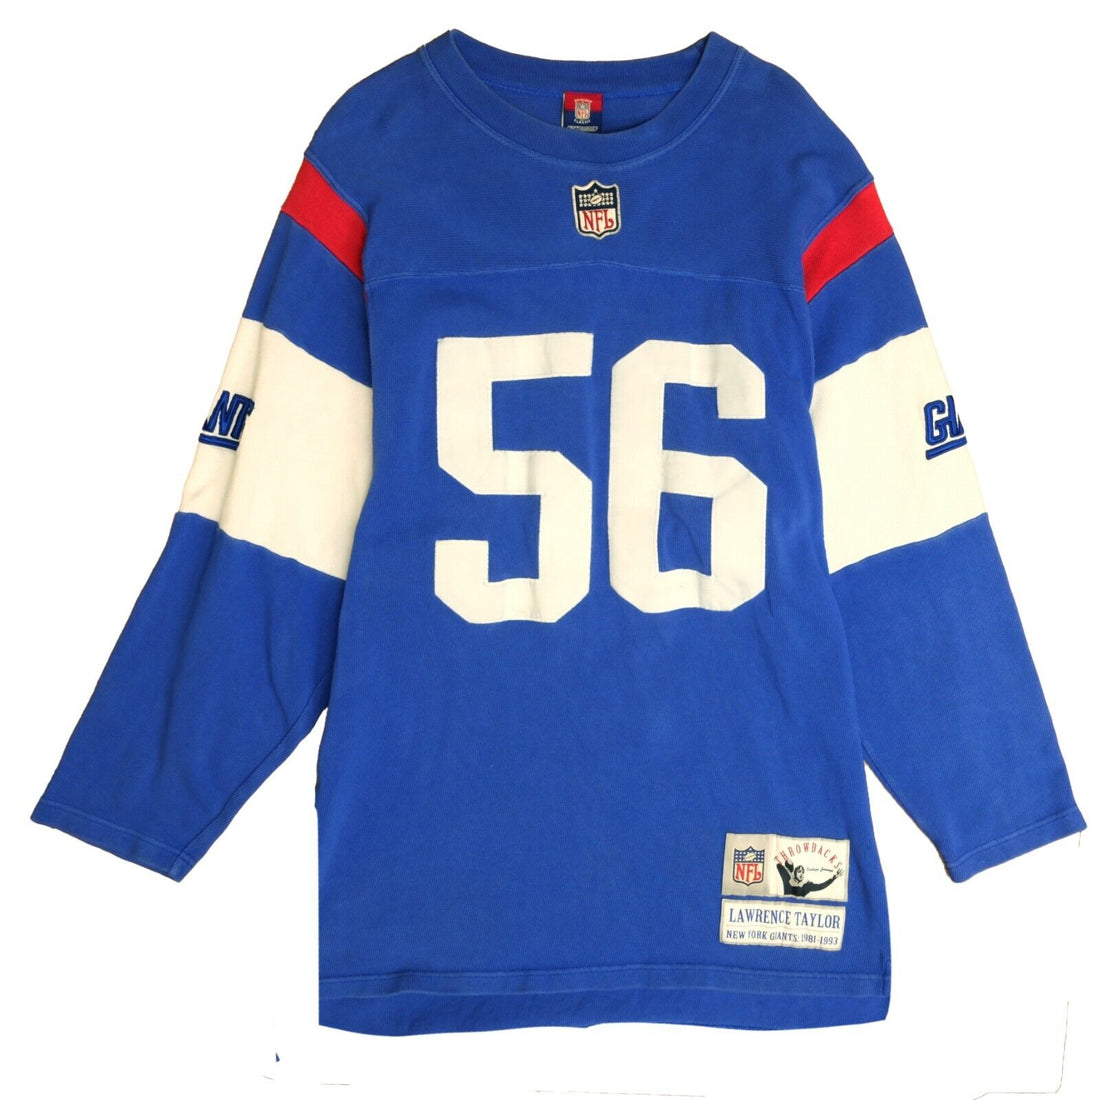 New York Giants Lawrence Taylor Throwback Sweatshirt Jersey Size XL NFL